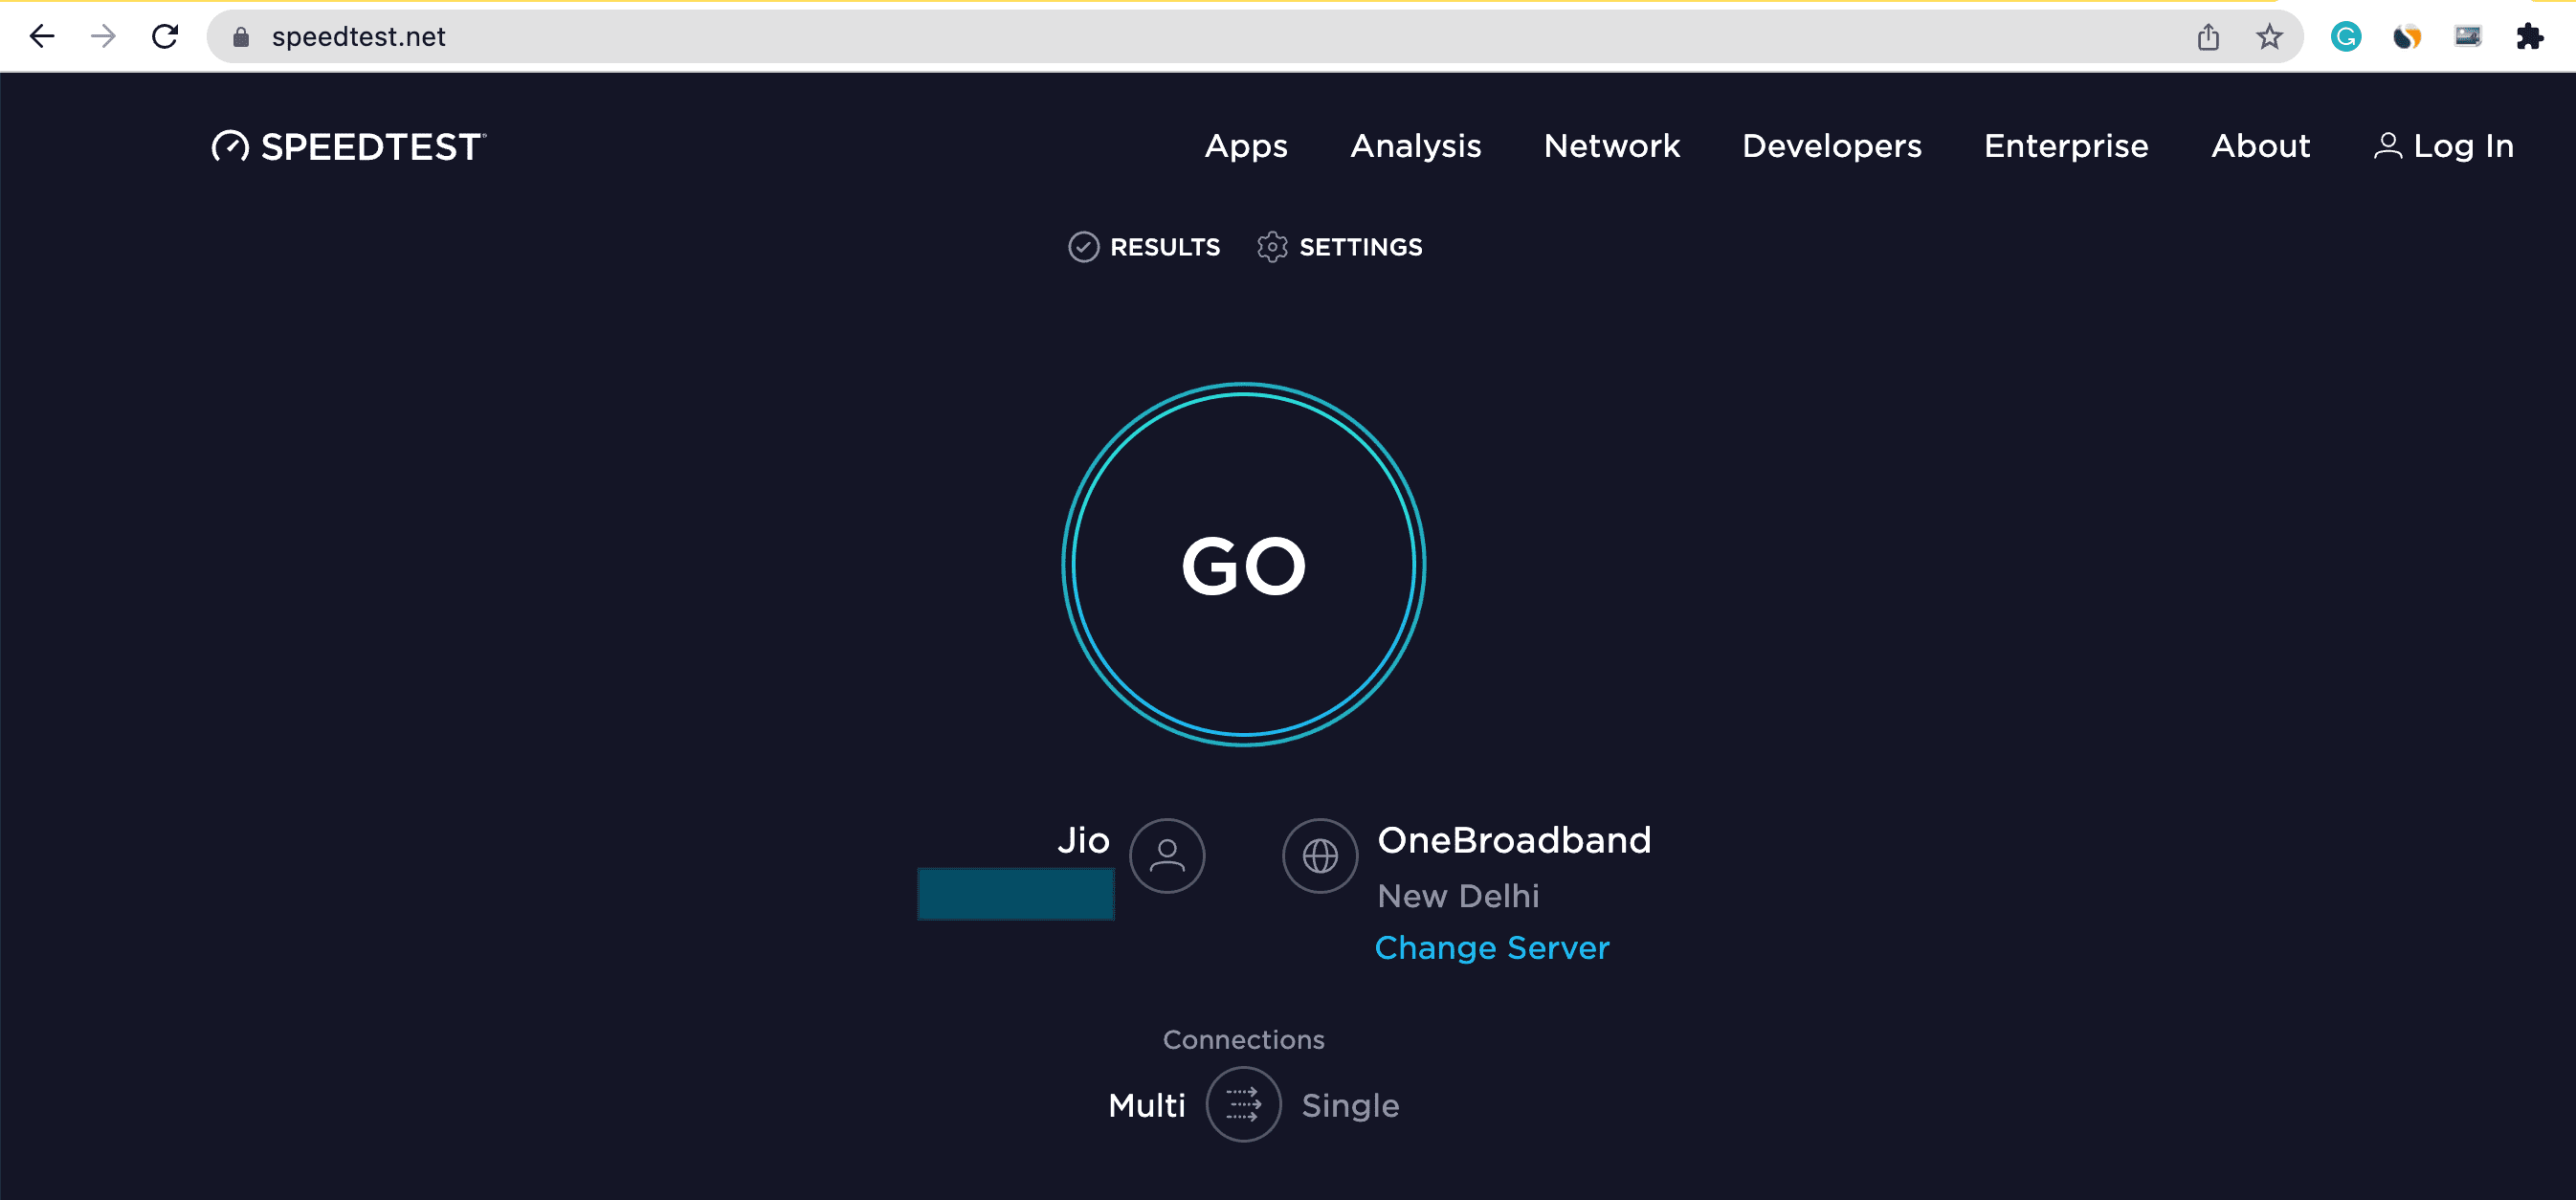 Speedtest.net to check download and upload speeds